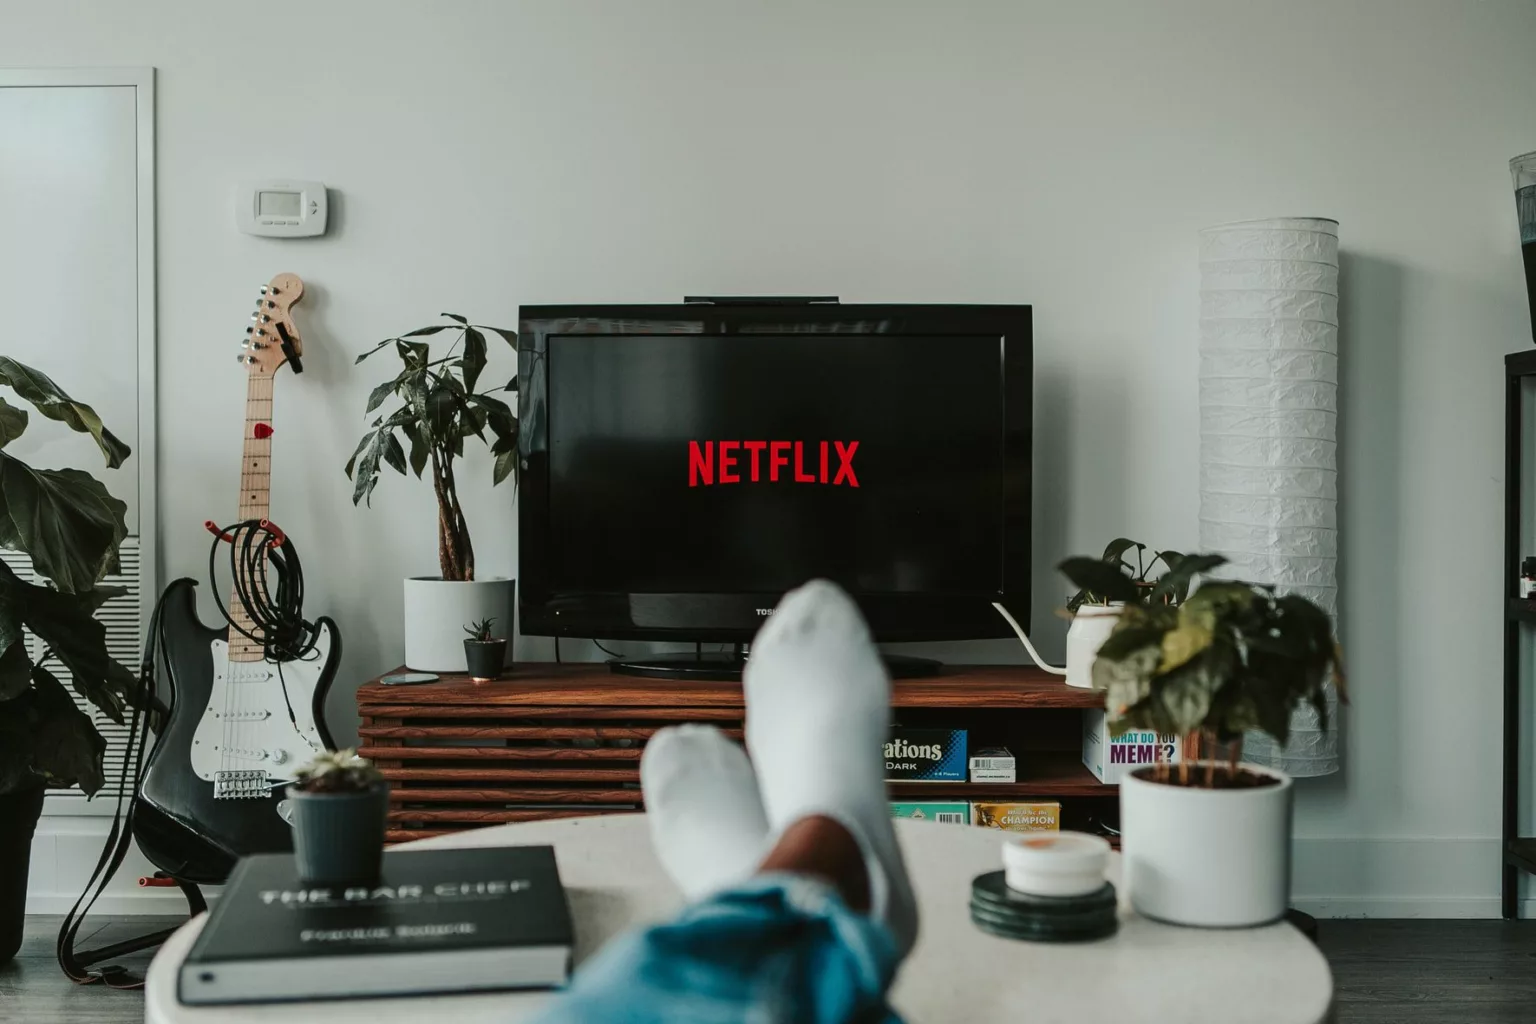 Data Plans to stream Netflix